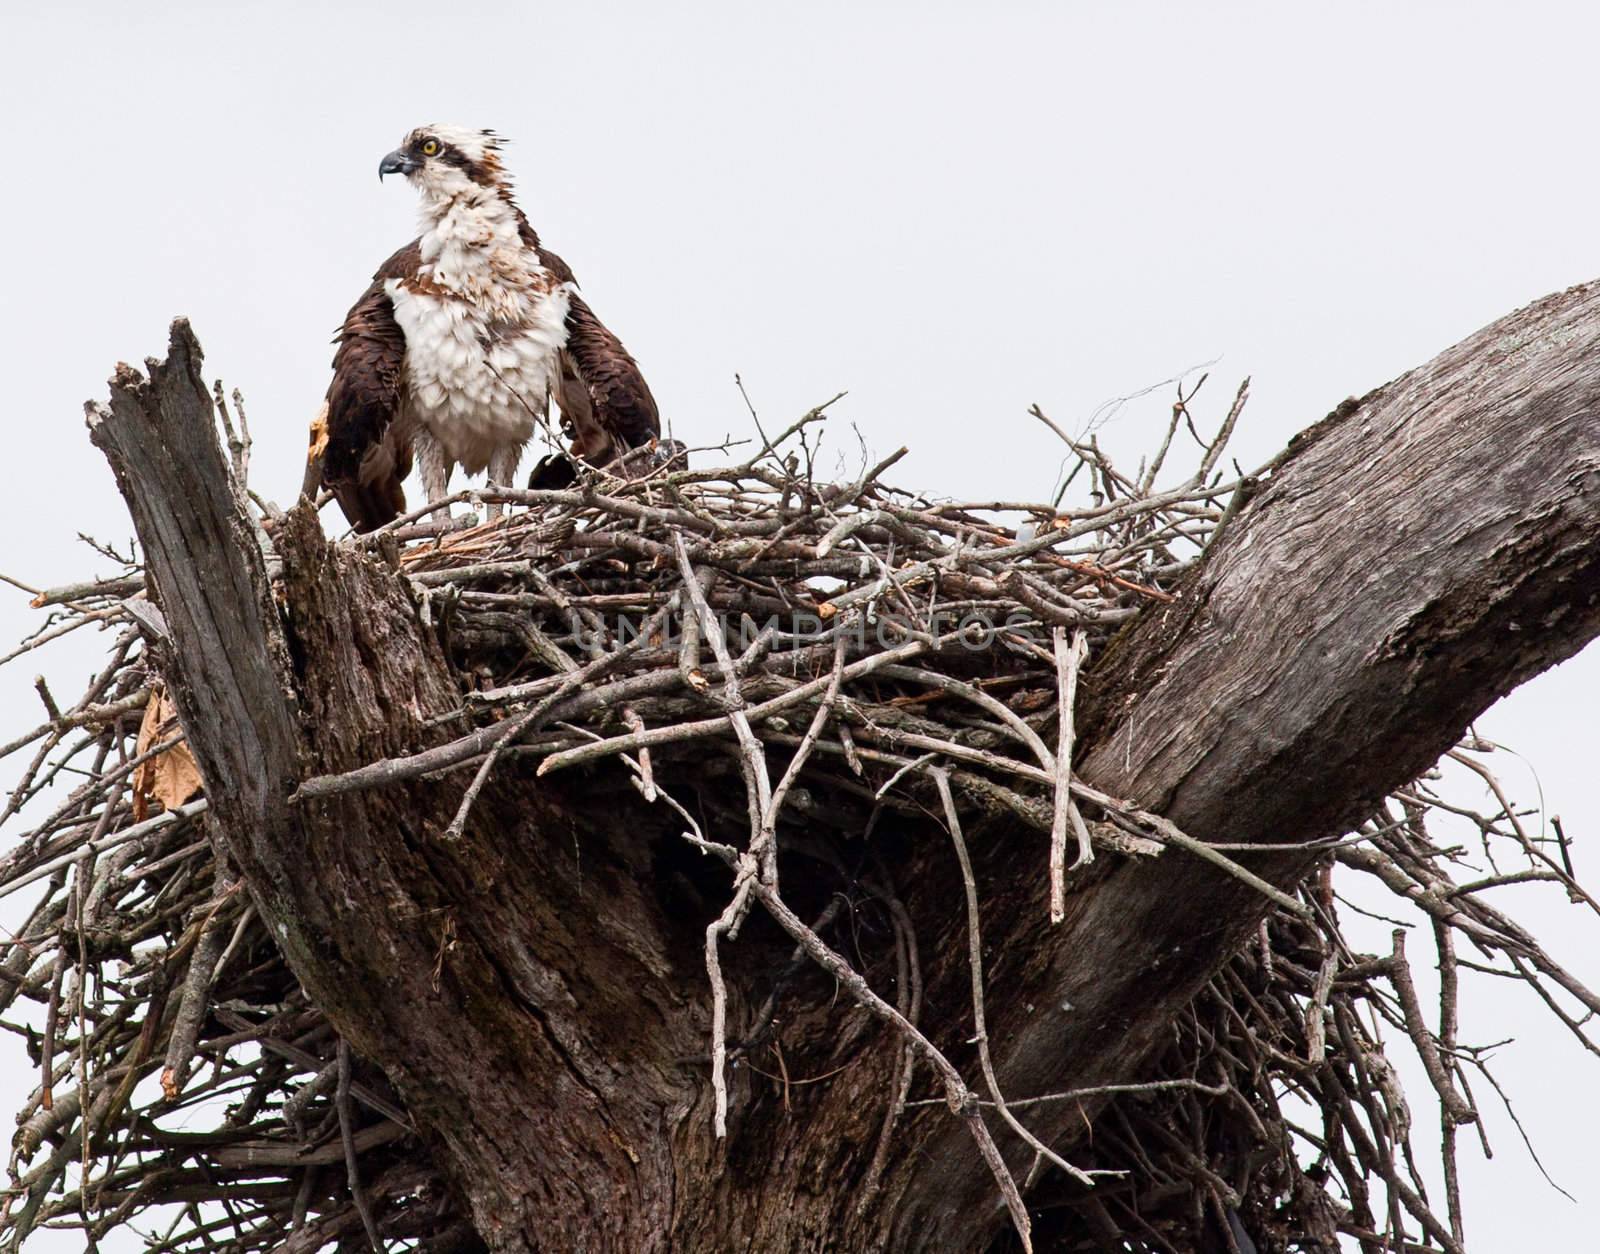 An osprey in a nest in a tree